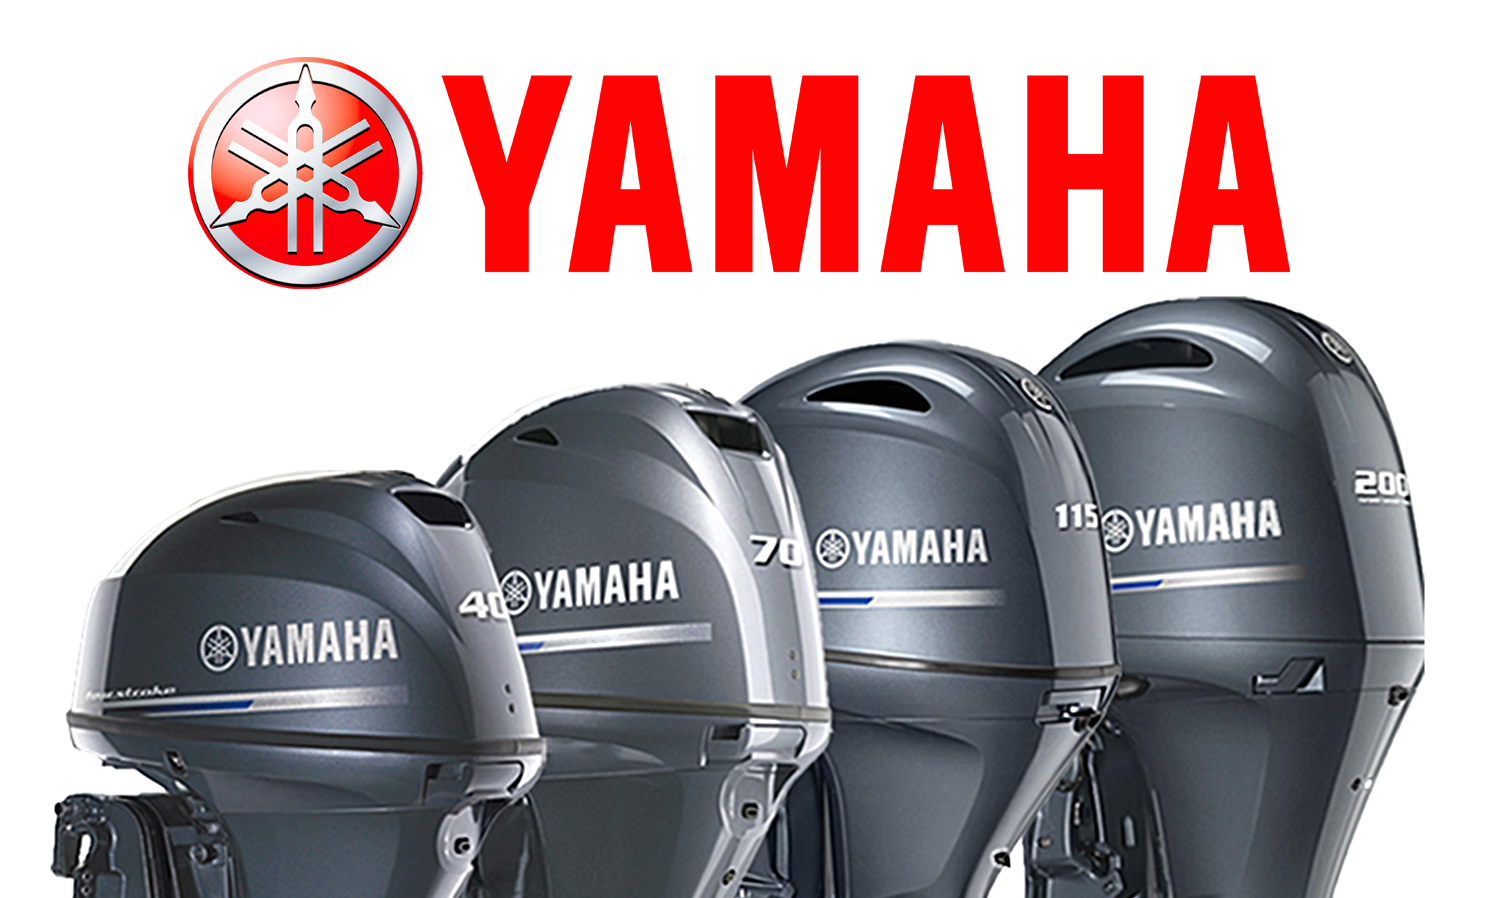 Yamaha boat service